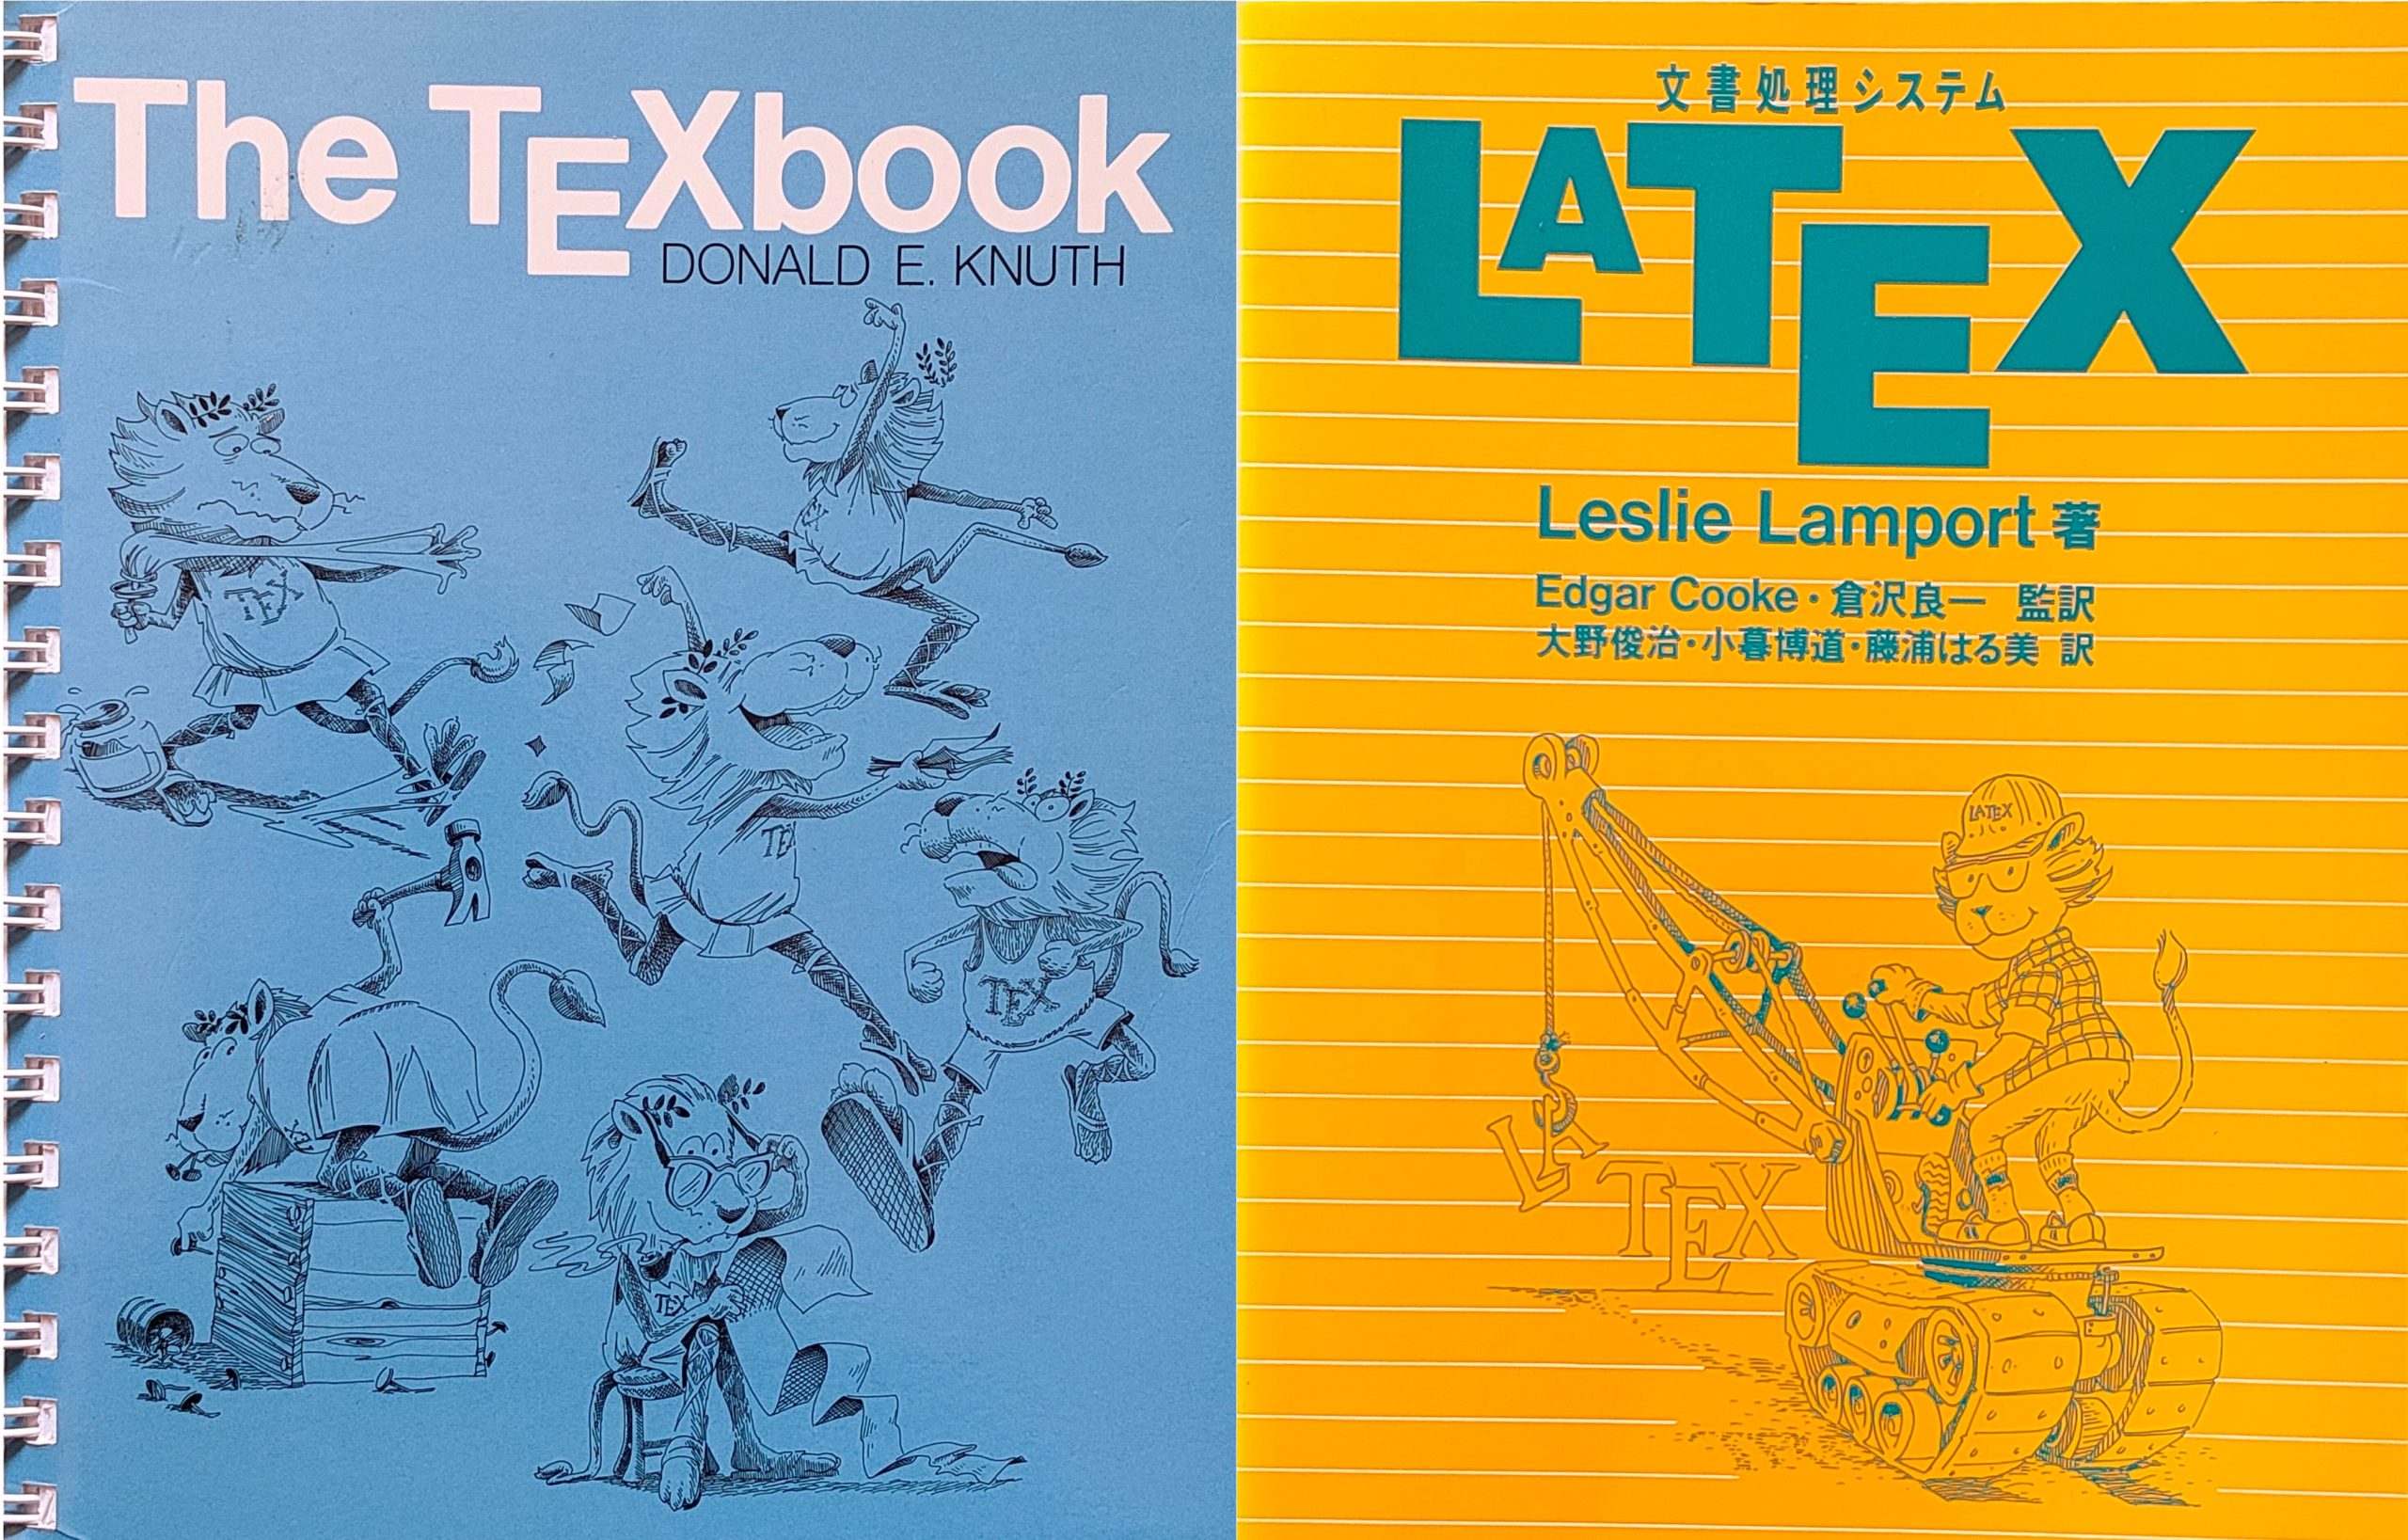 LaTeXbookカバー